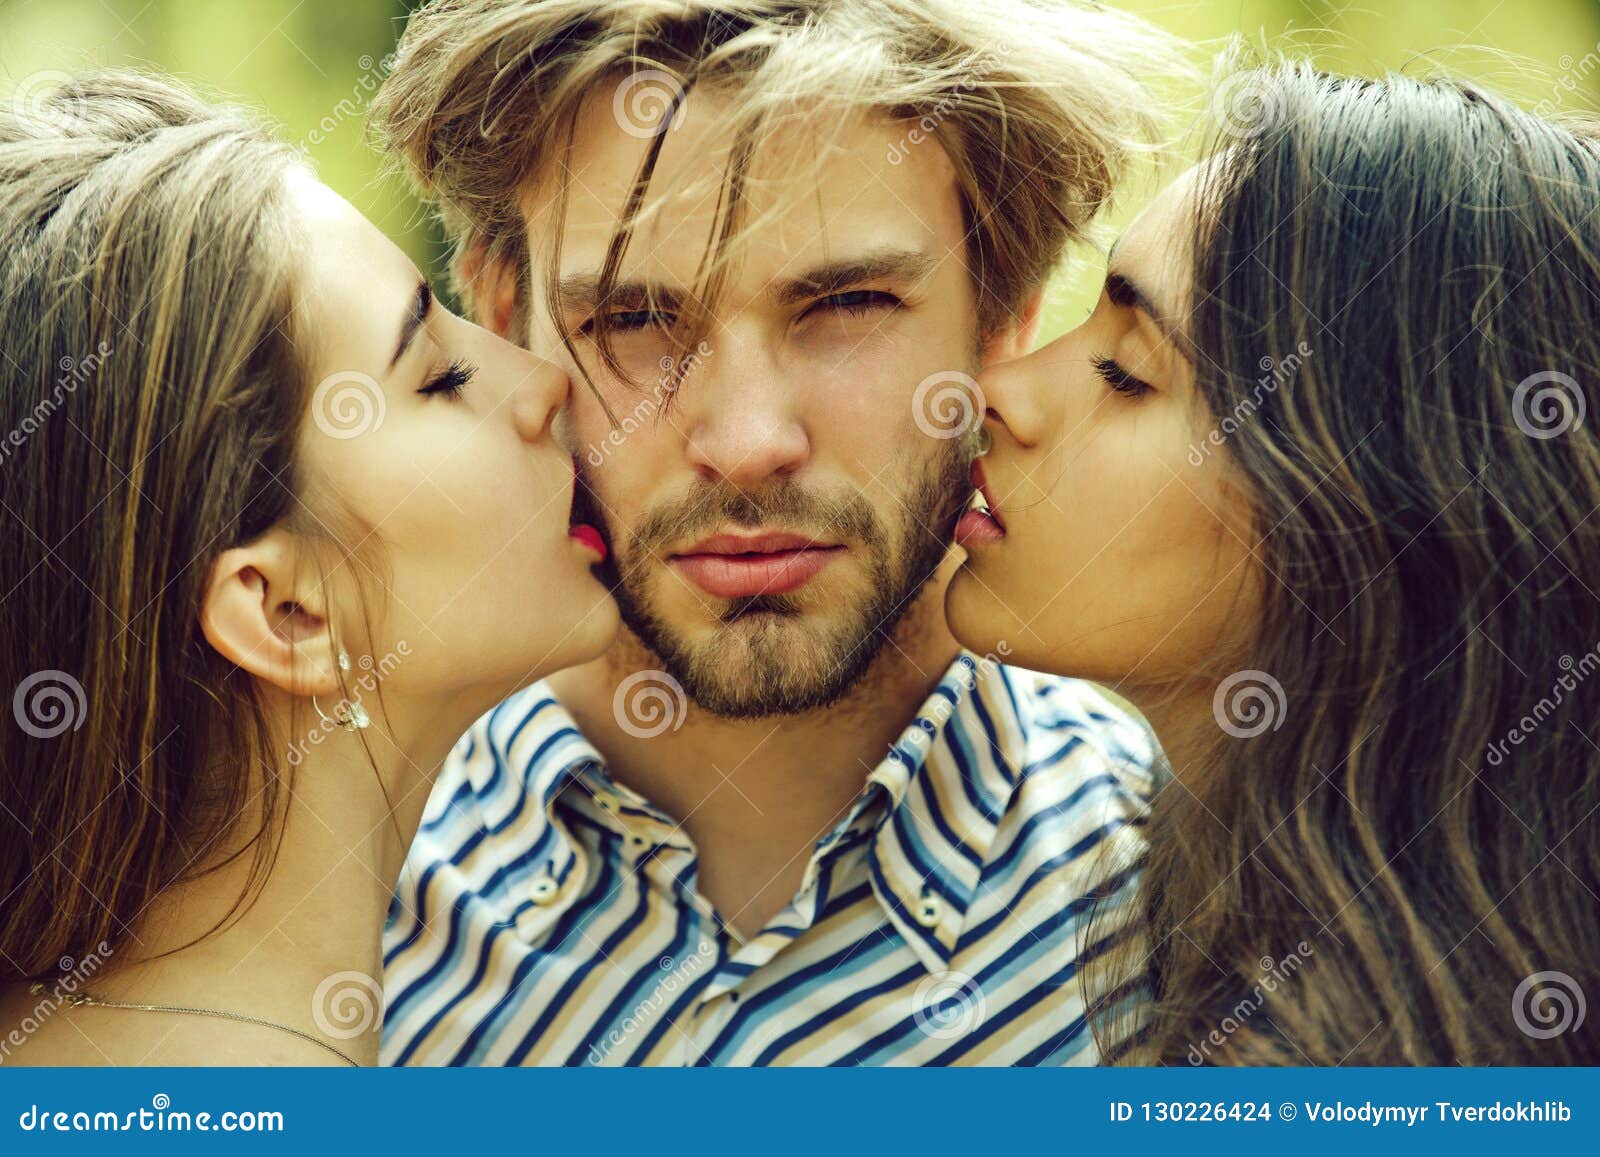 Girl man kiss Where Do